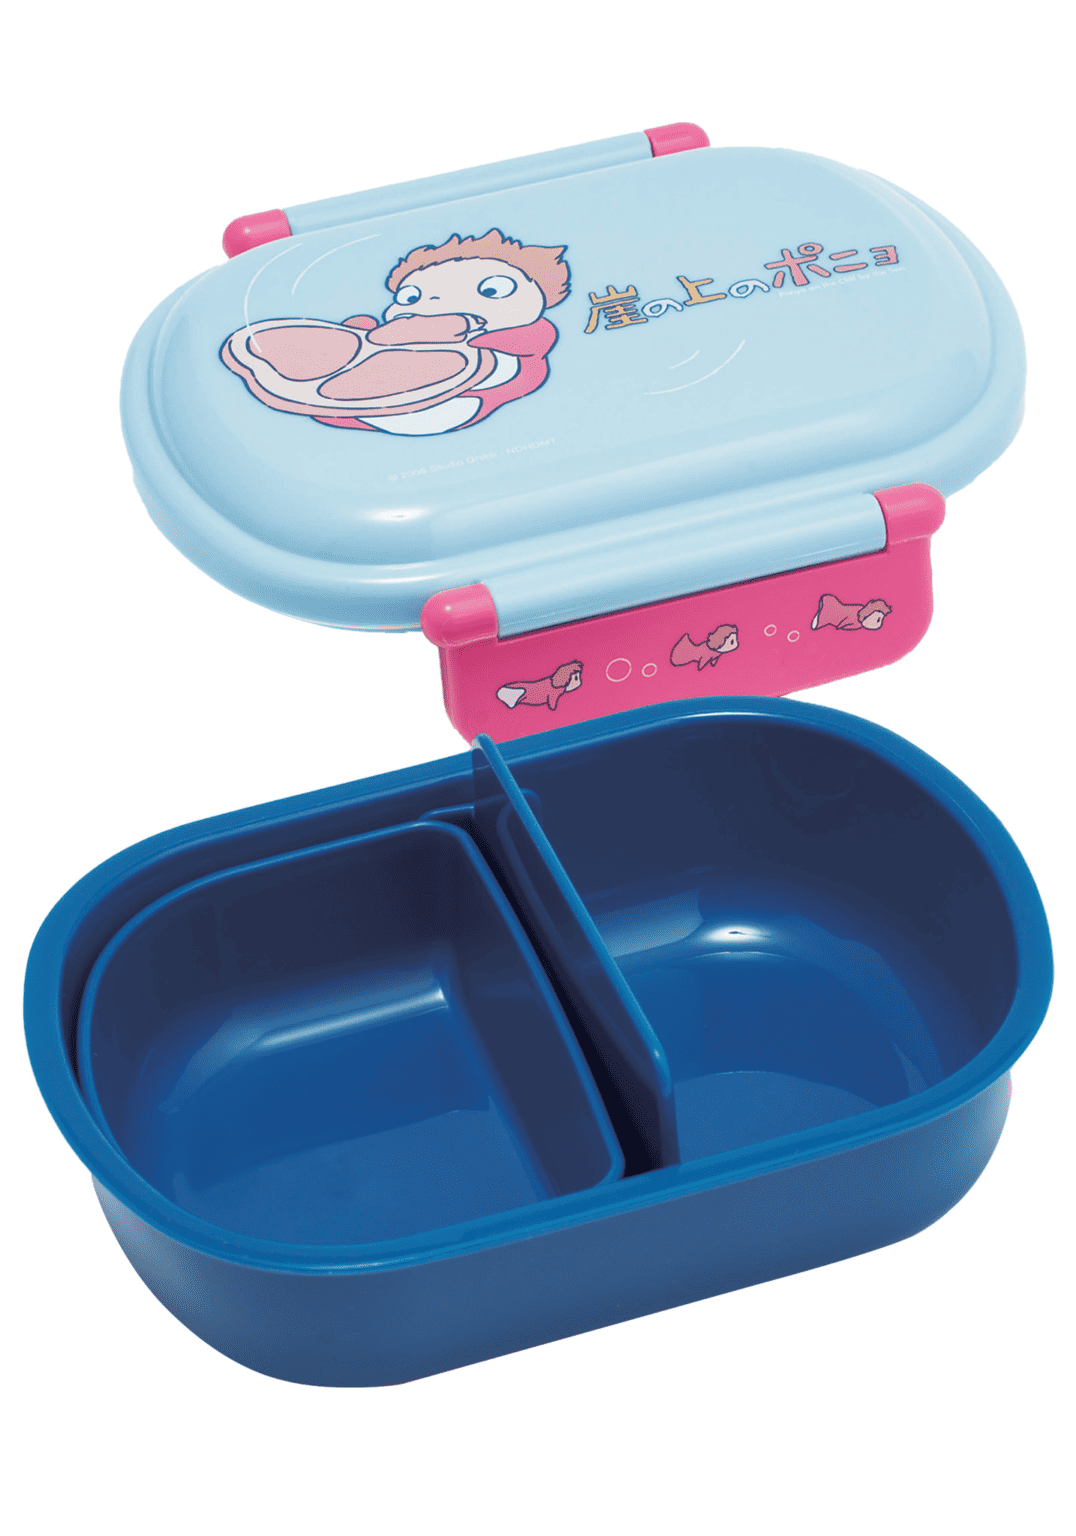 Clever Idiots Ponyo Bento Lunch Box Kawaii Gifts 4973307649424